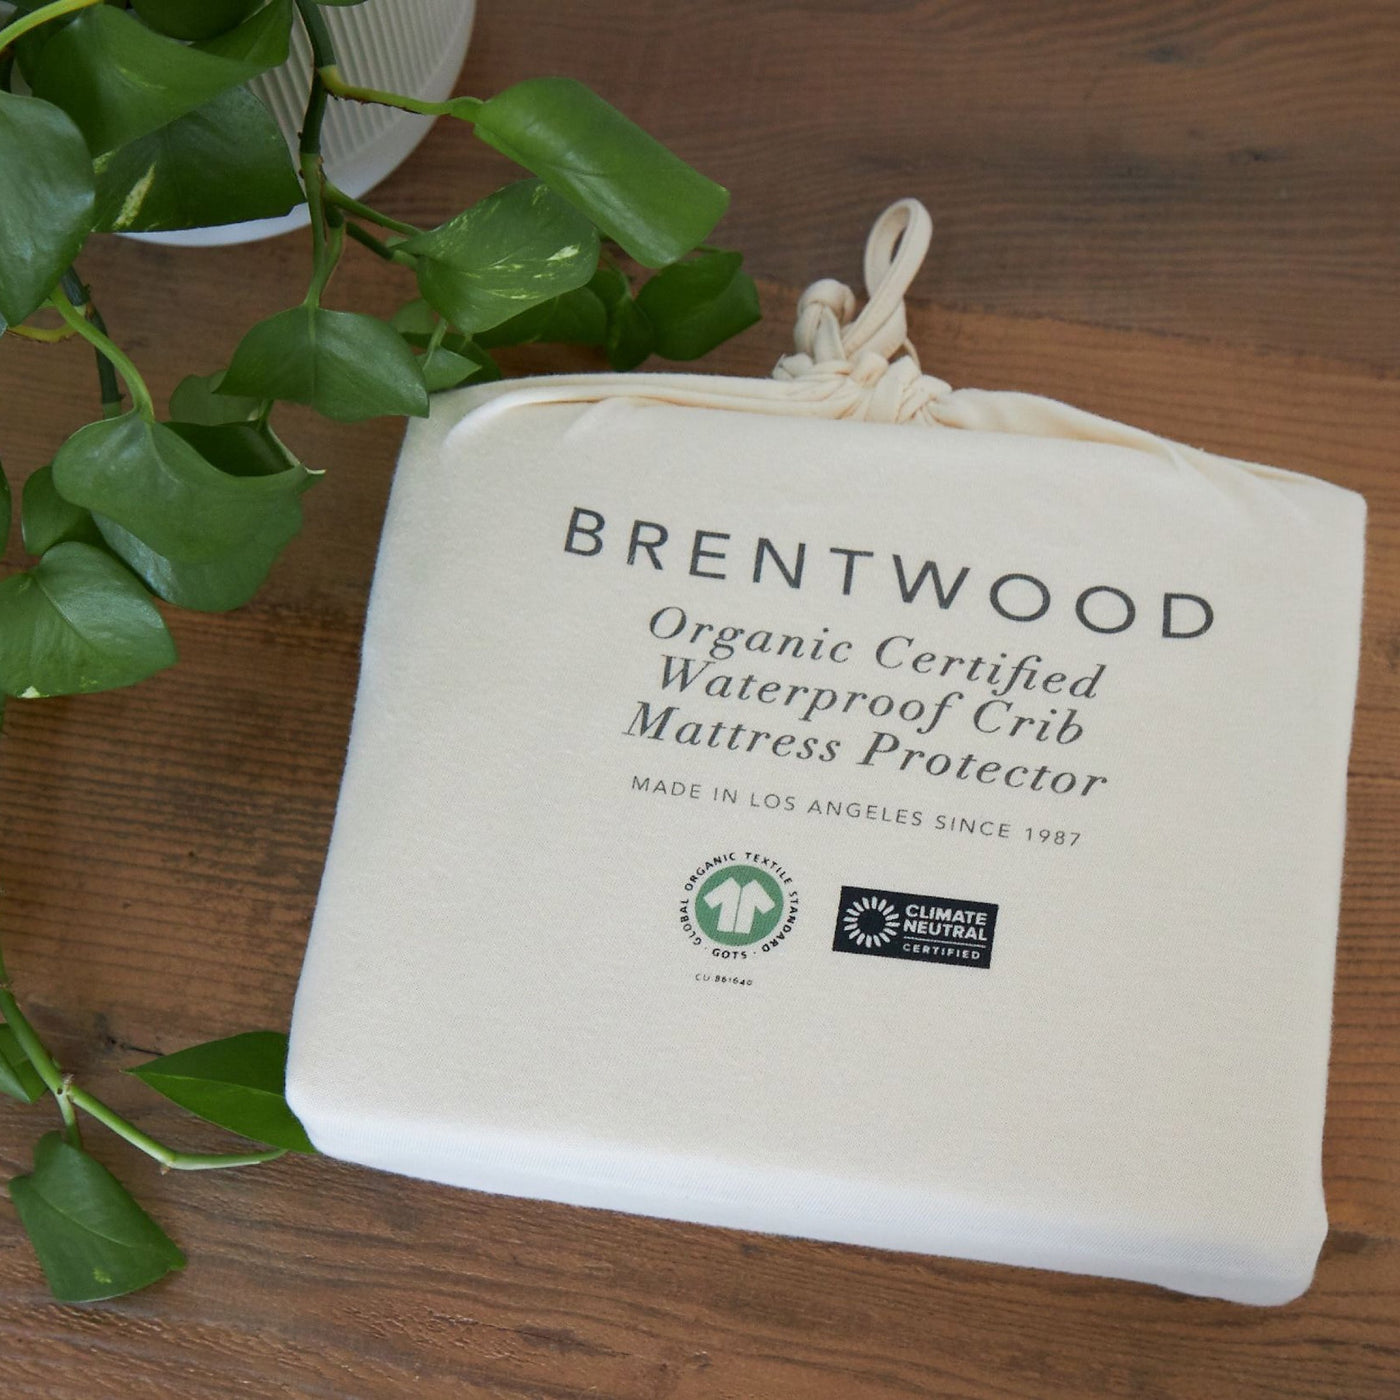 Brentwood Originals Waterproof Pet Throw and Furniture Protector